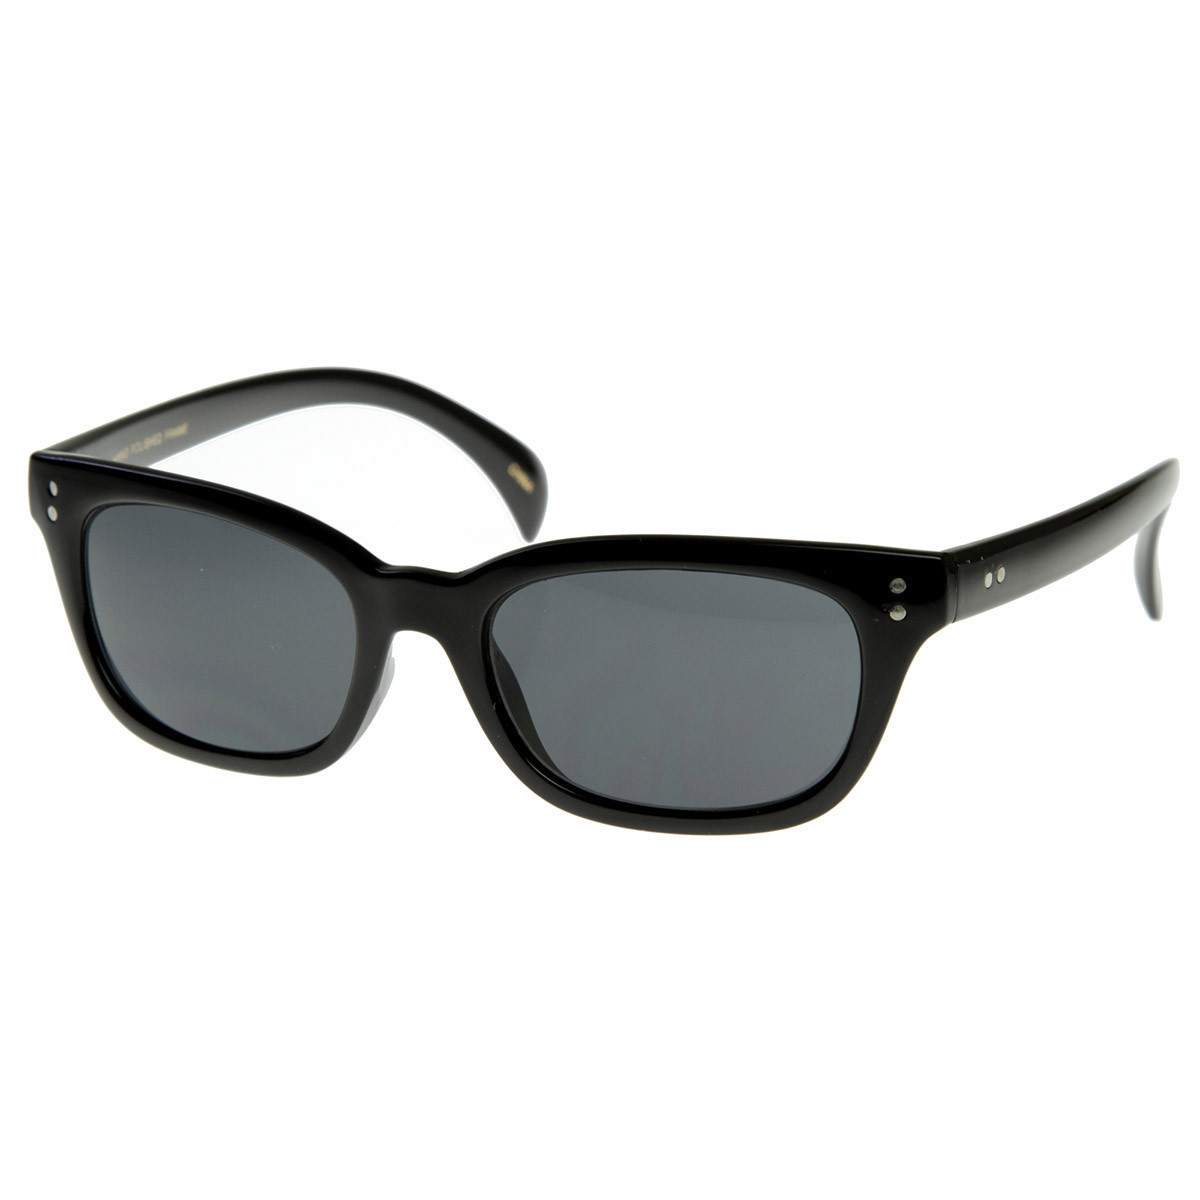 New Vintage Bold Premium ZeroUV Quality Small Oval Horned Rim Sunglasses - 8367 - Tortoise